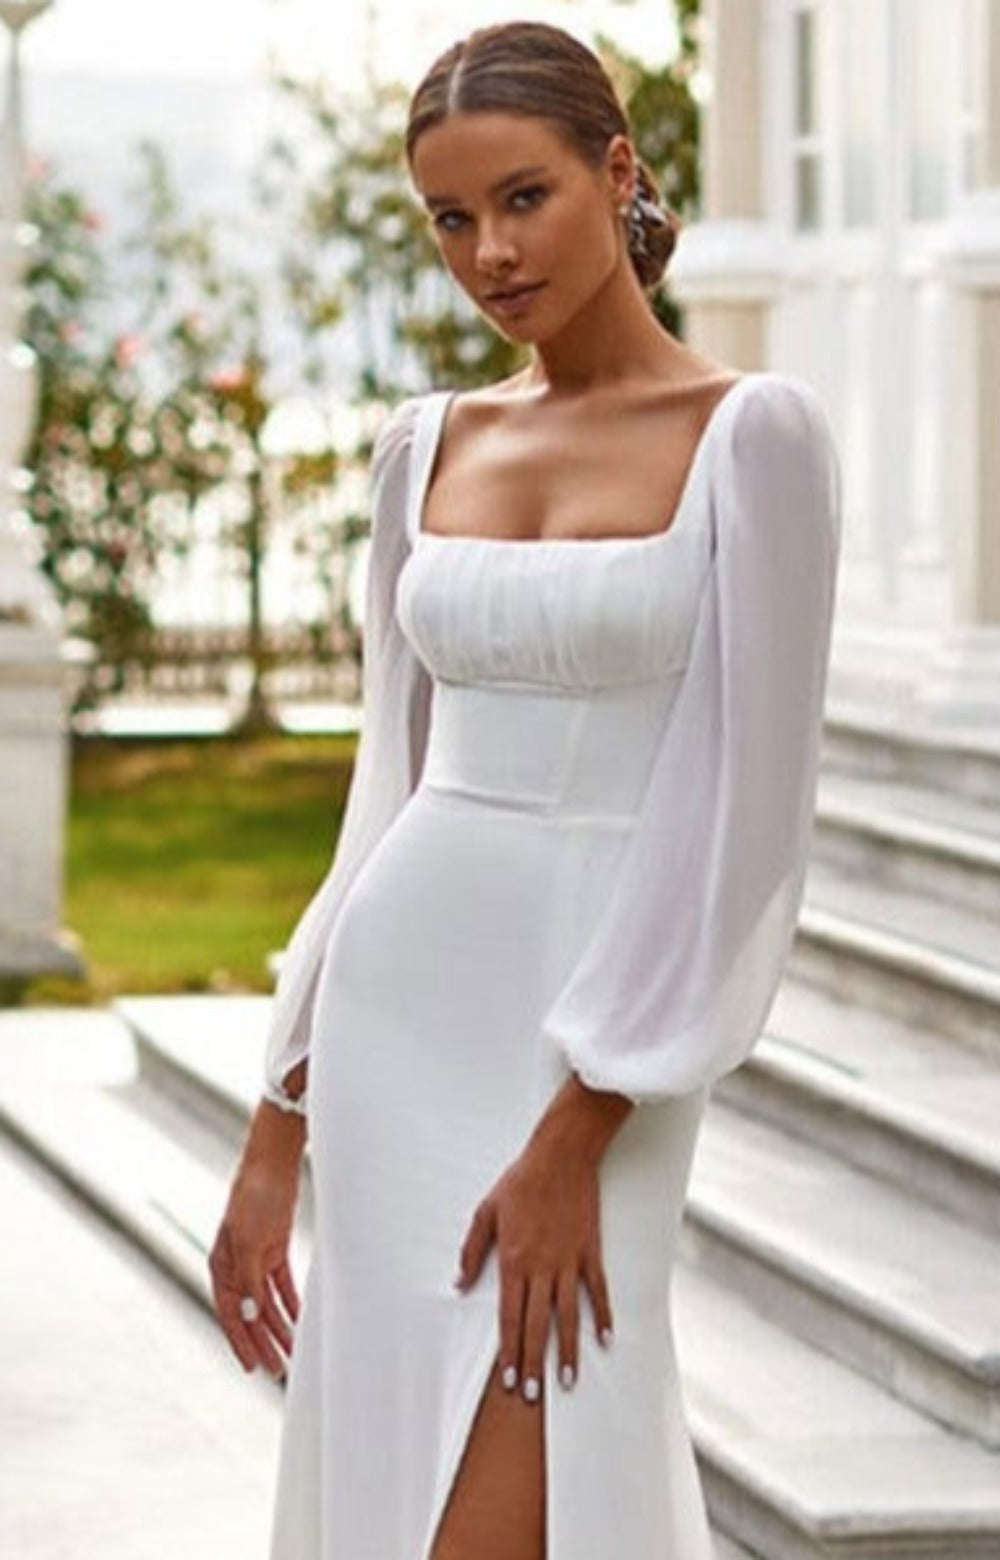 Women's Chiffon Long Sleeved Wedding Dress